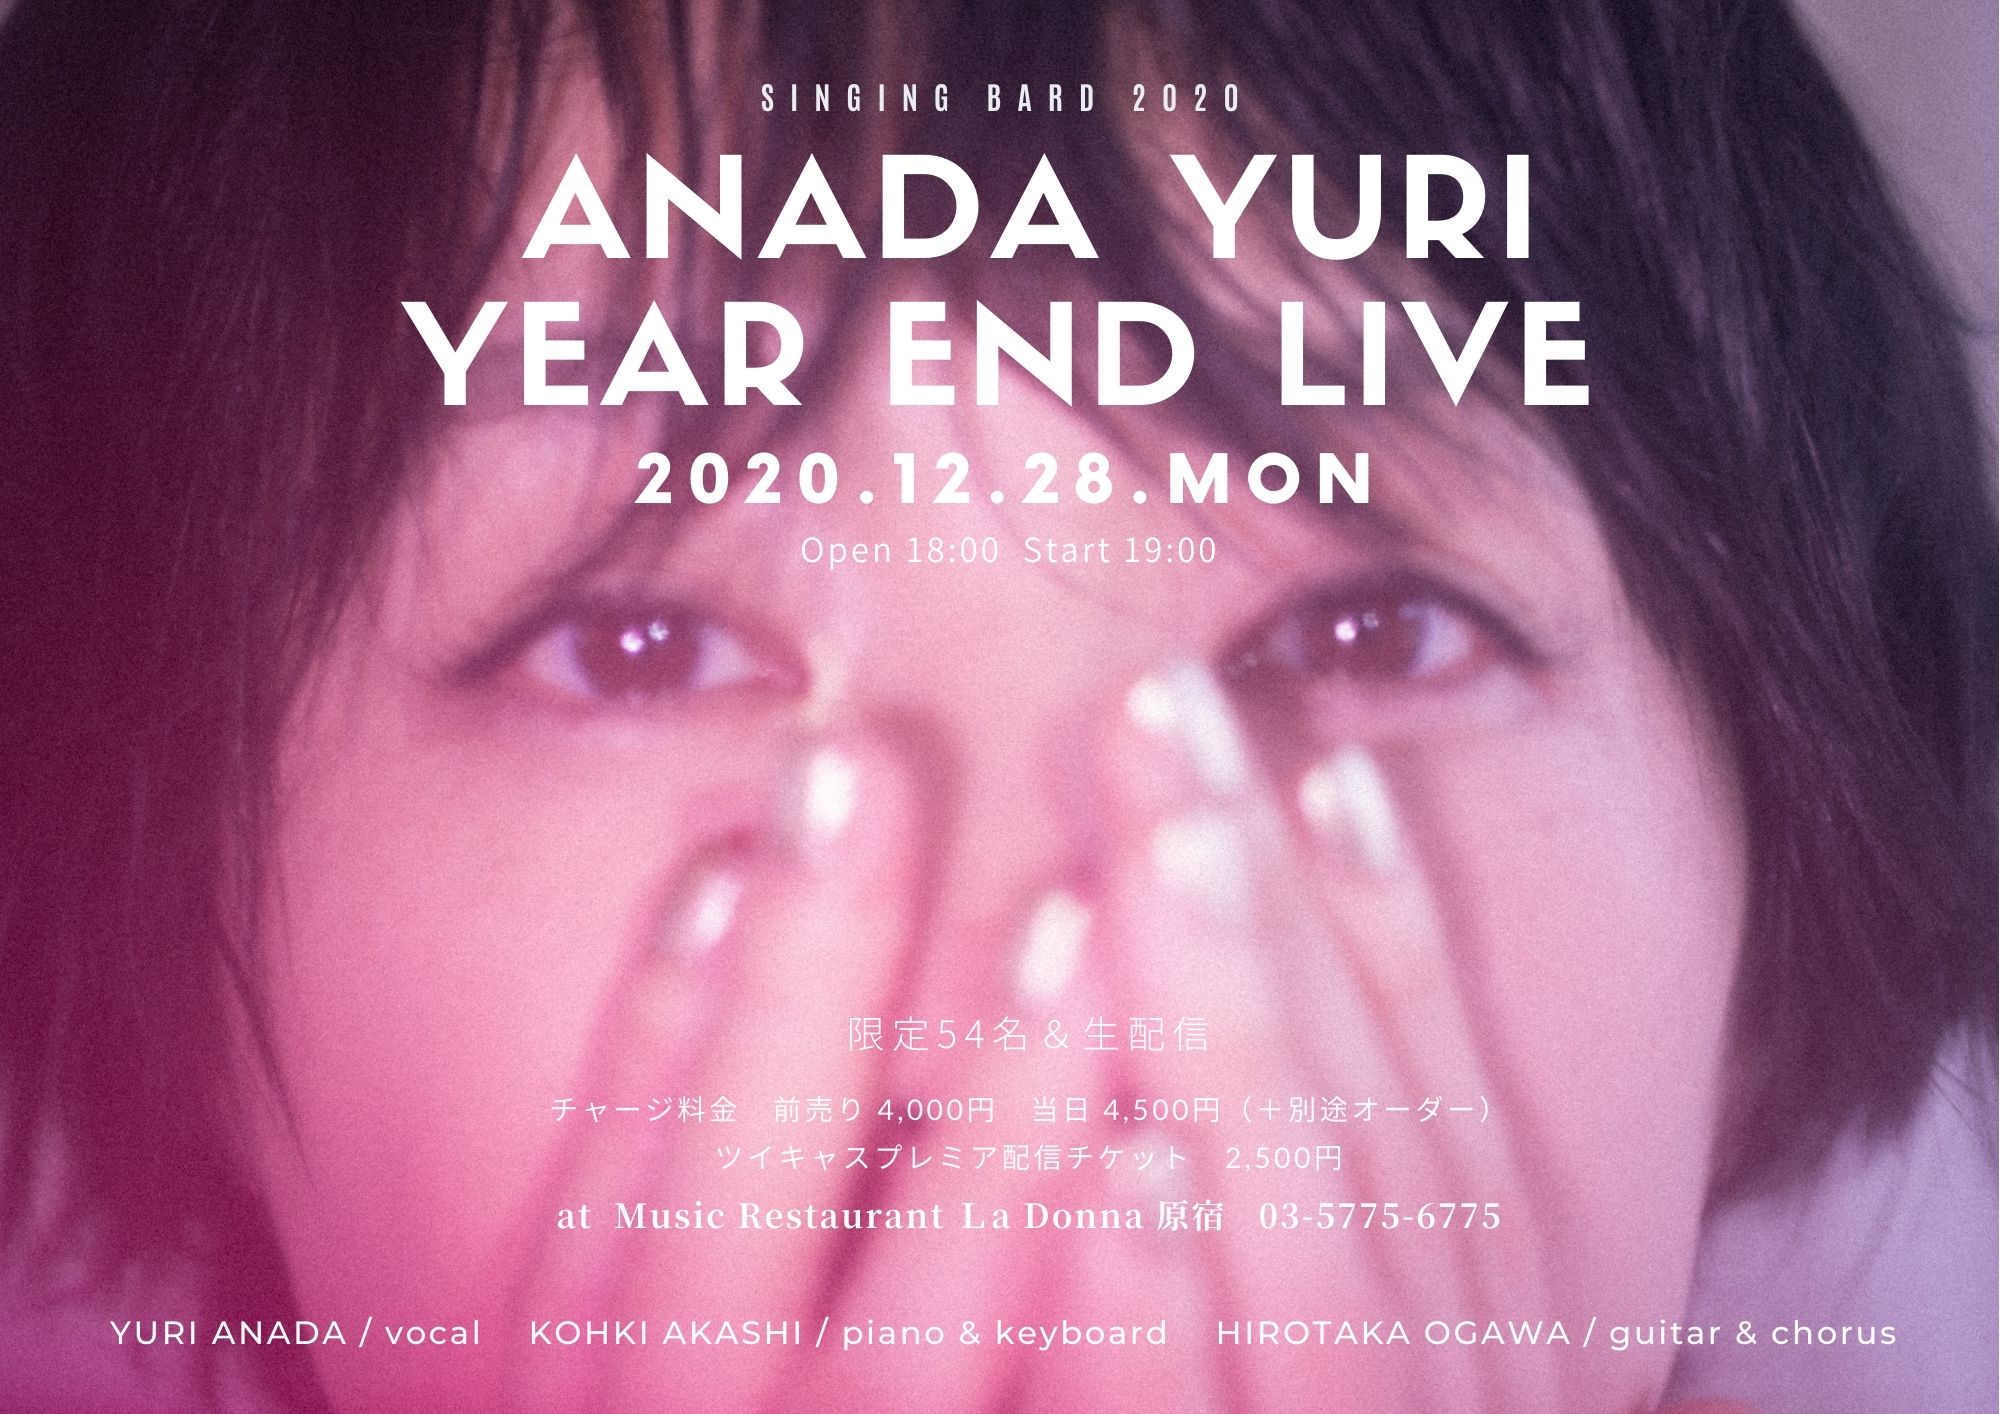 SINGING BARD 2020　ANADA YURI YEAR END LIVE